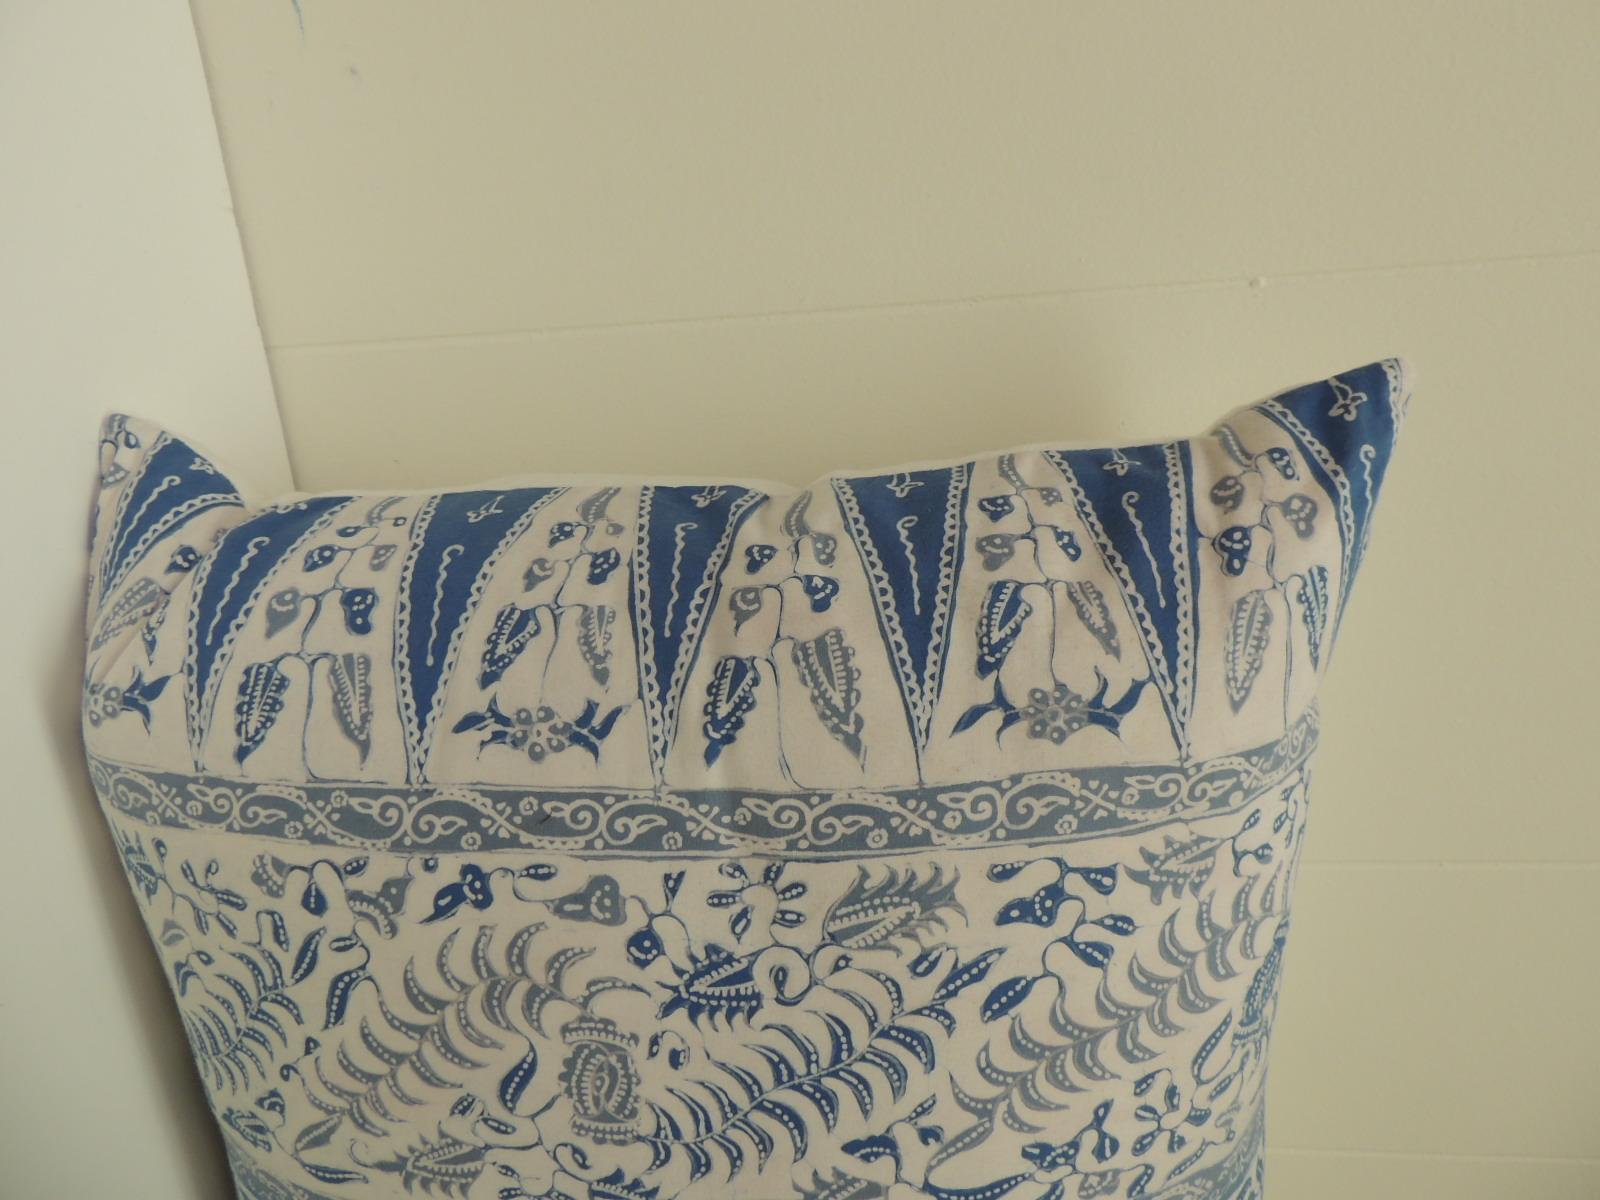 Vintage batik blue and white square decorative pillow
Blue and white vintage batik textile handcrafted square throw pillows. Decorative square batik textile pillows finished with white linen backing, throw pillows handcrafted and designed in the